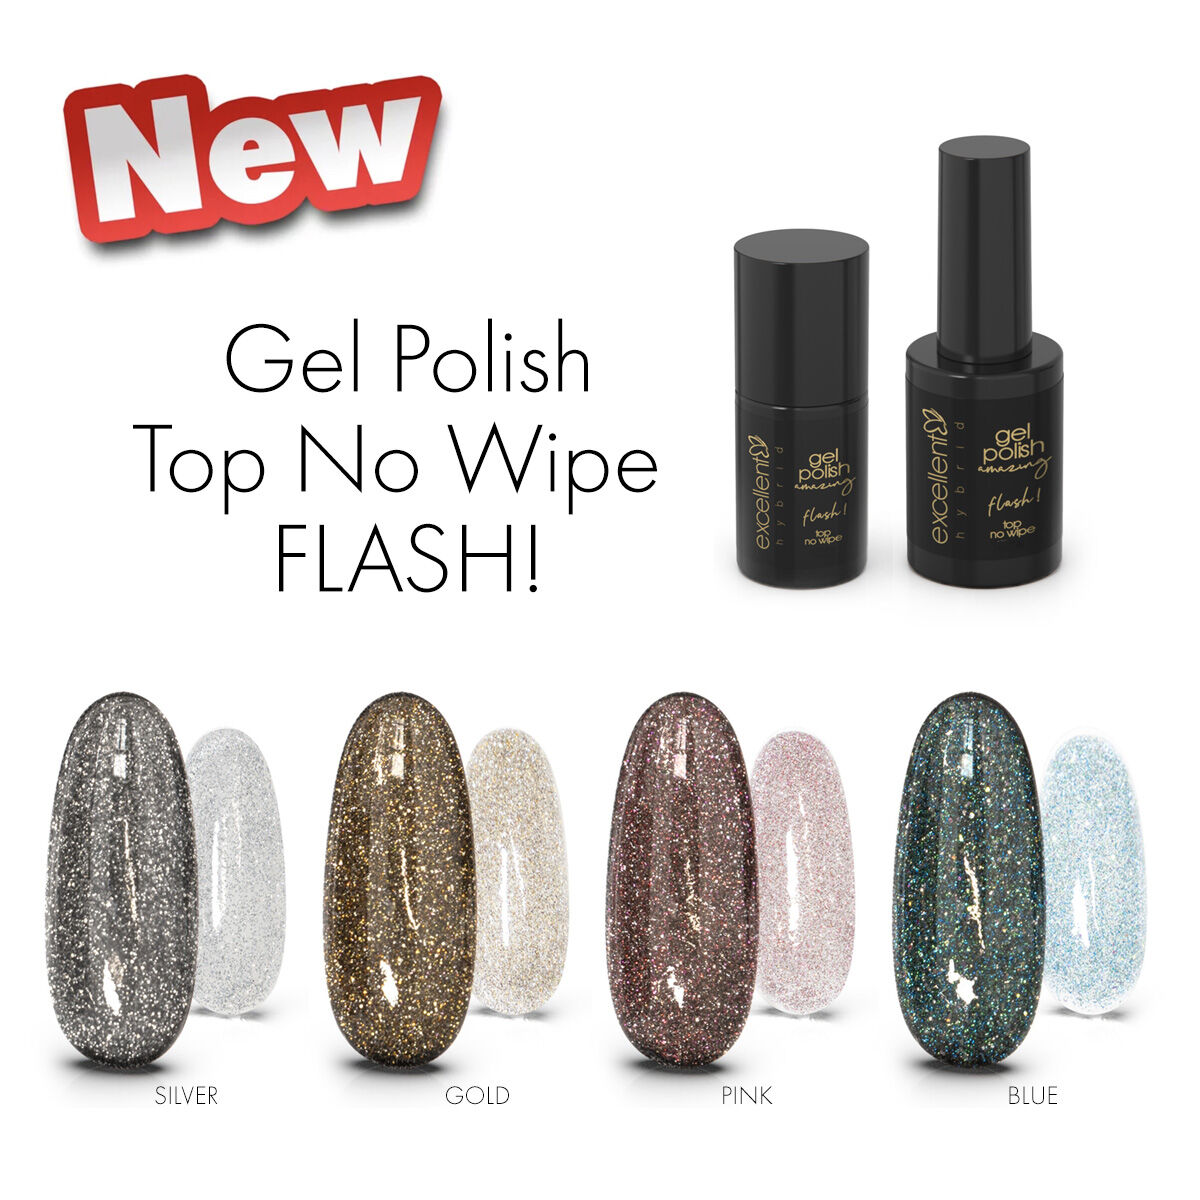 Gel Polish Flash! Top No Wipe